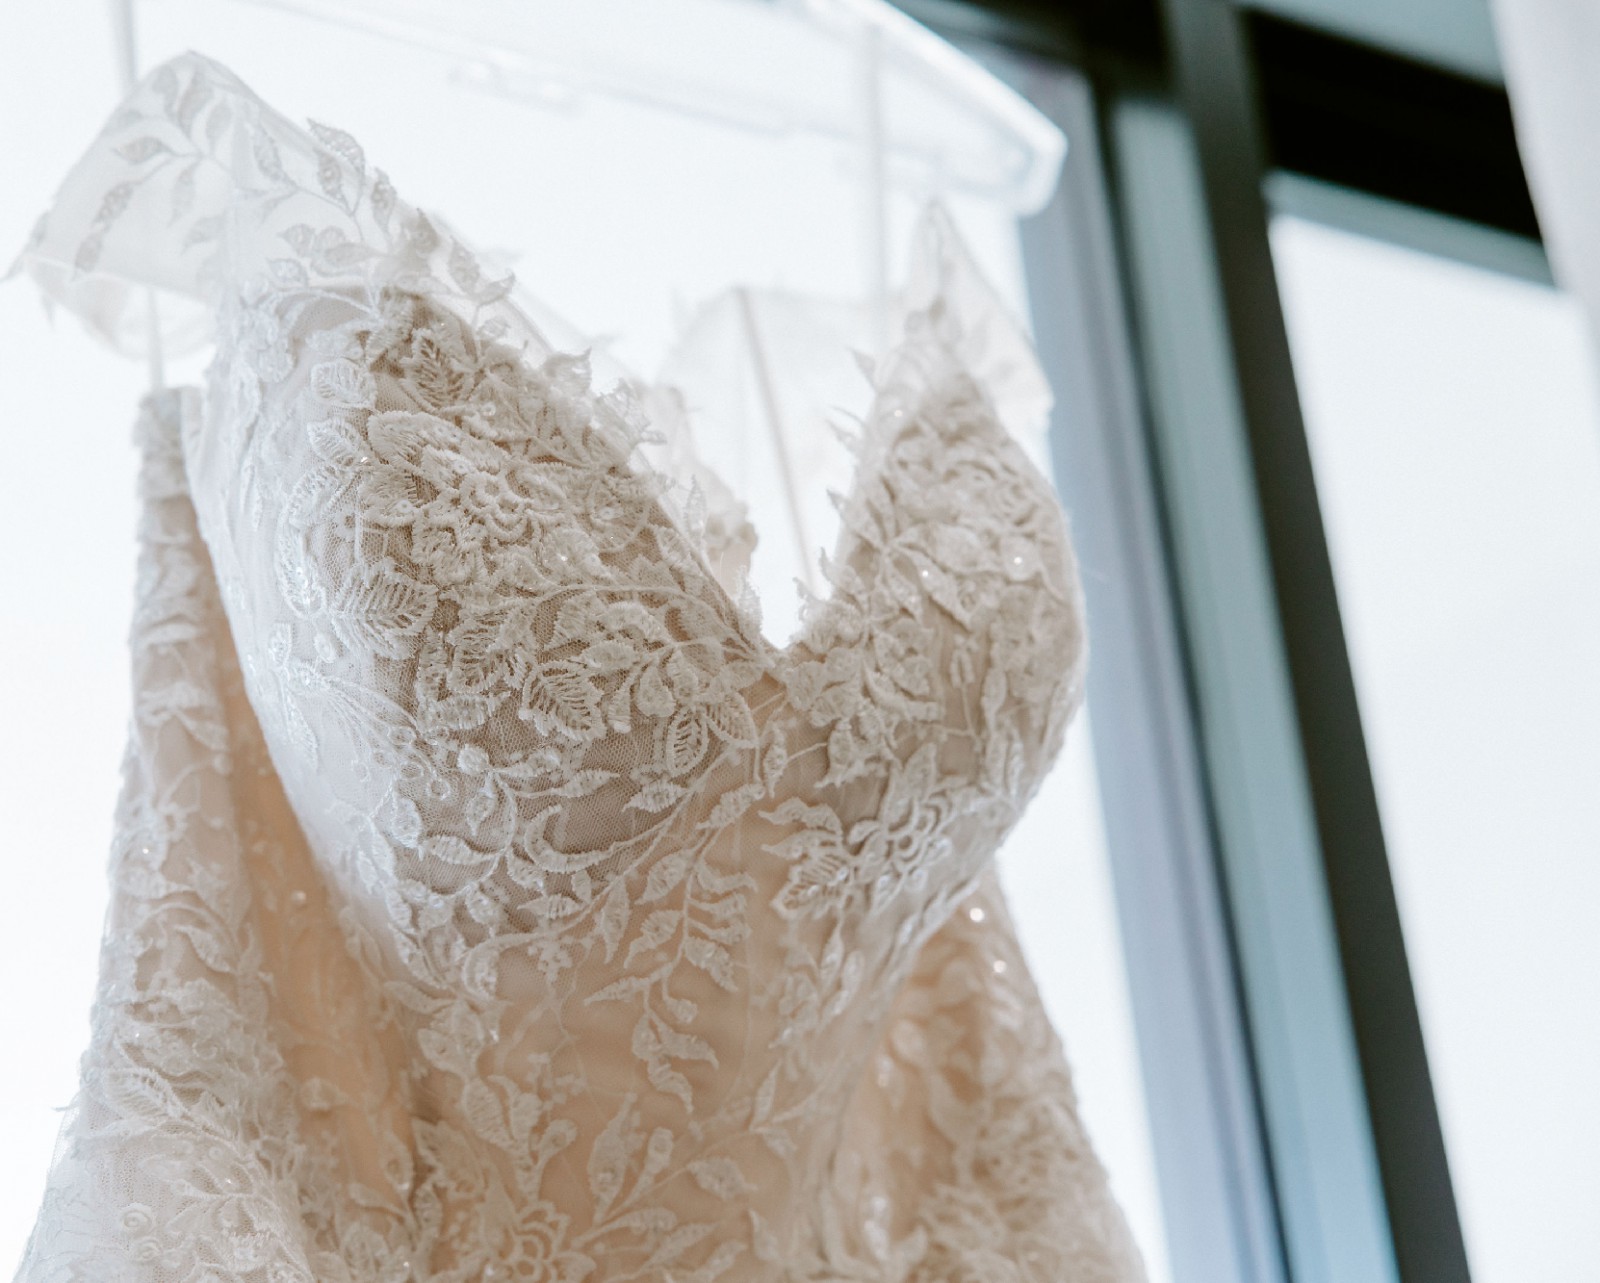 Luv Bridal Marchelle New Wedding Dress - Stillwhite